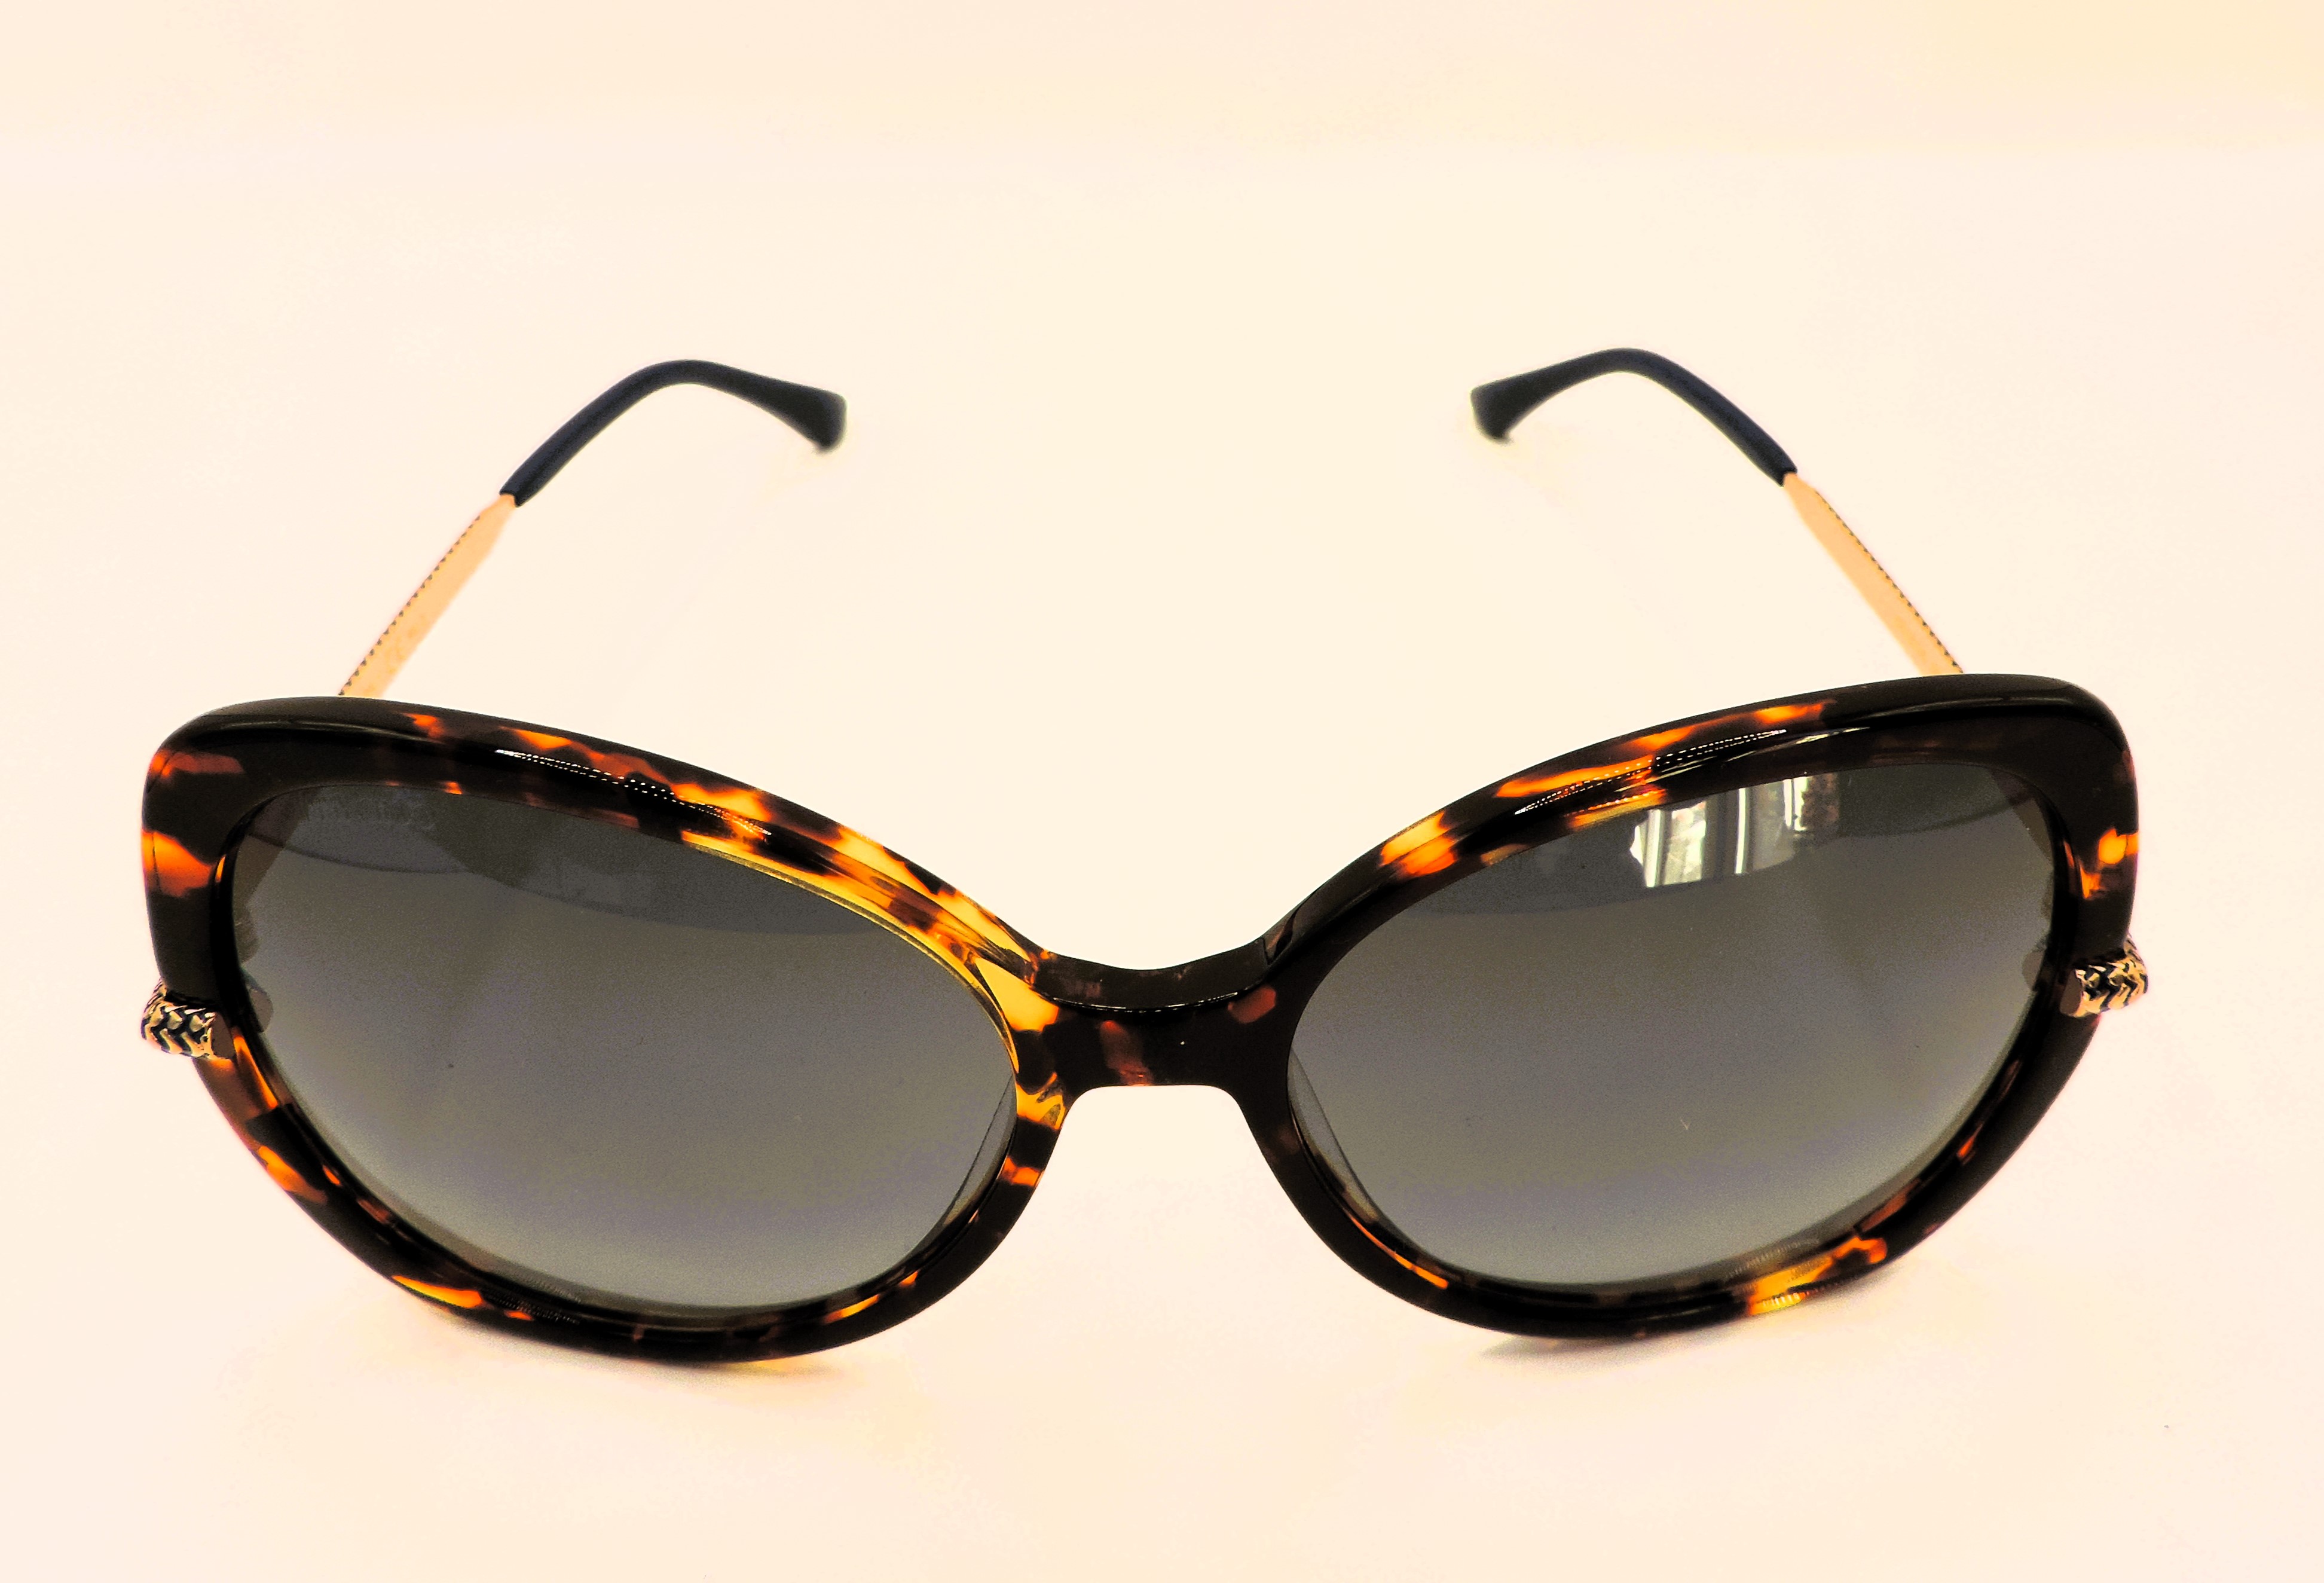 Jimmy Choo Tortoiseshell Framed Sunglasses 0861GB With Case New - Image 4 of 14